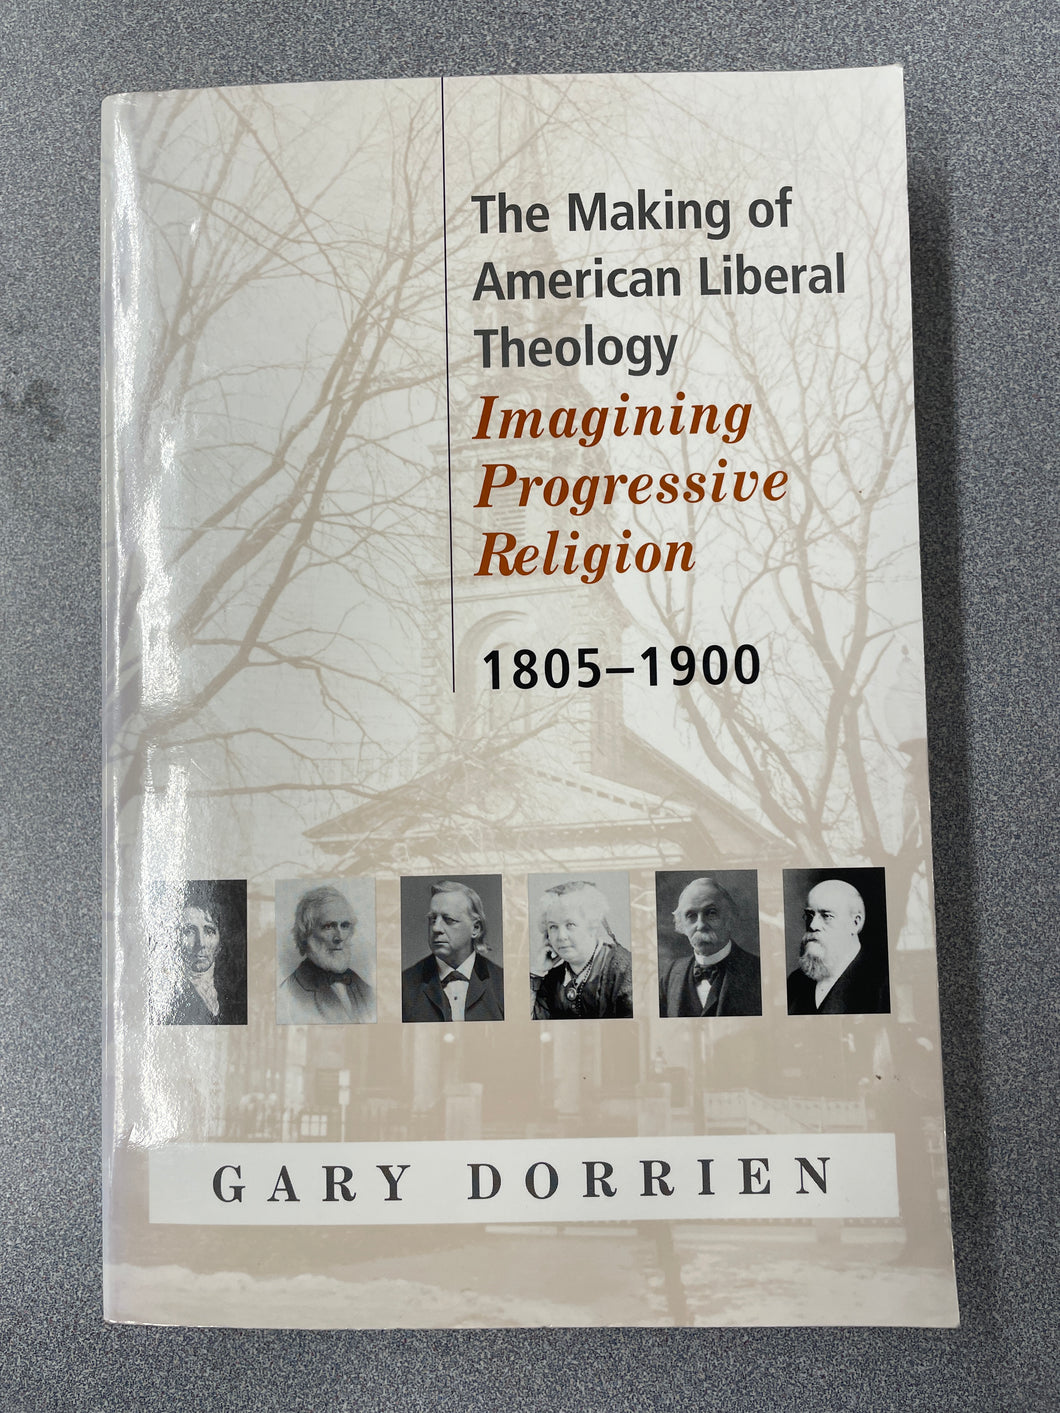 RS The Making of American Liberal Theology; Imagining Progressive Religion 1805-1900, Dorrien, Gary [2001] N 4/24